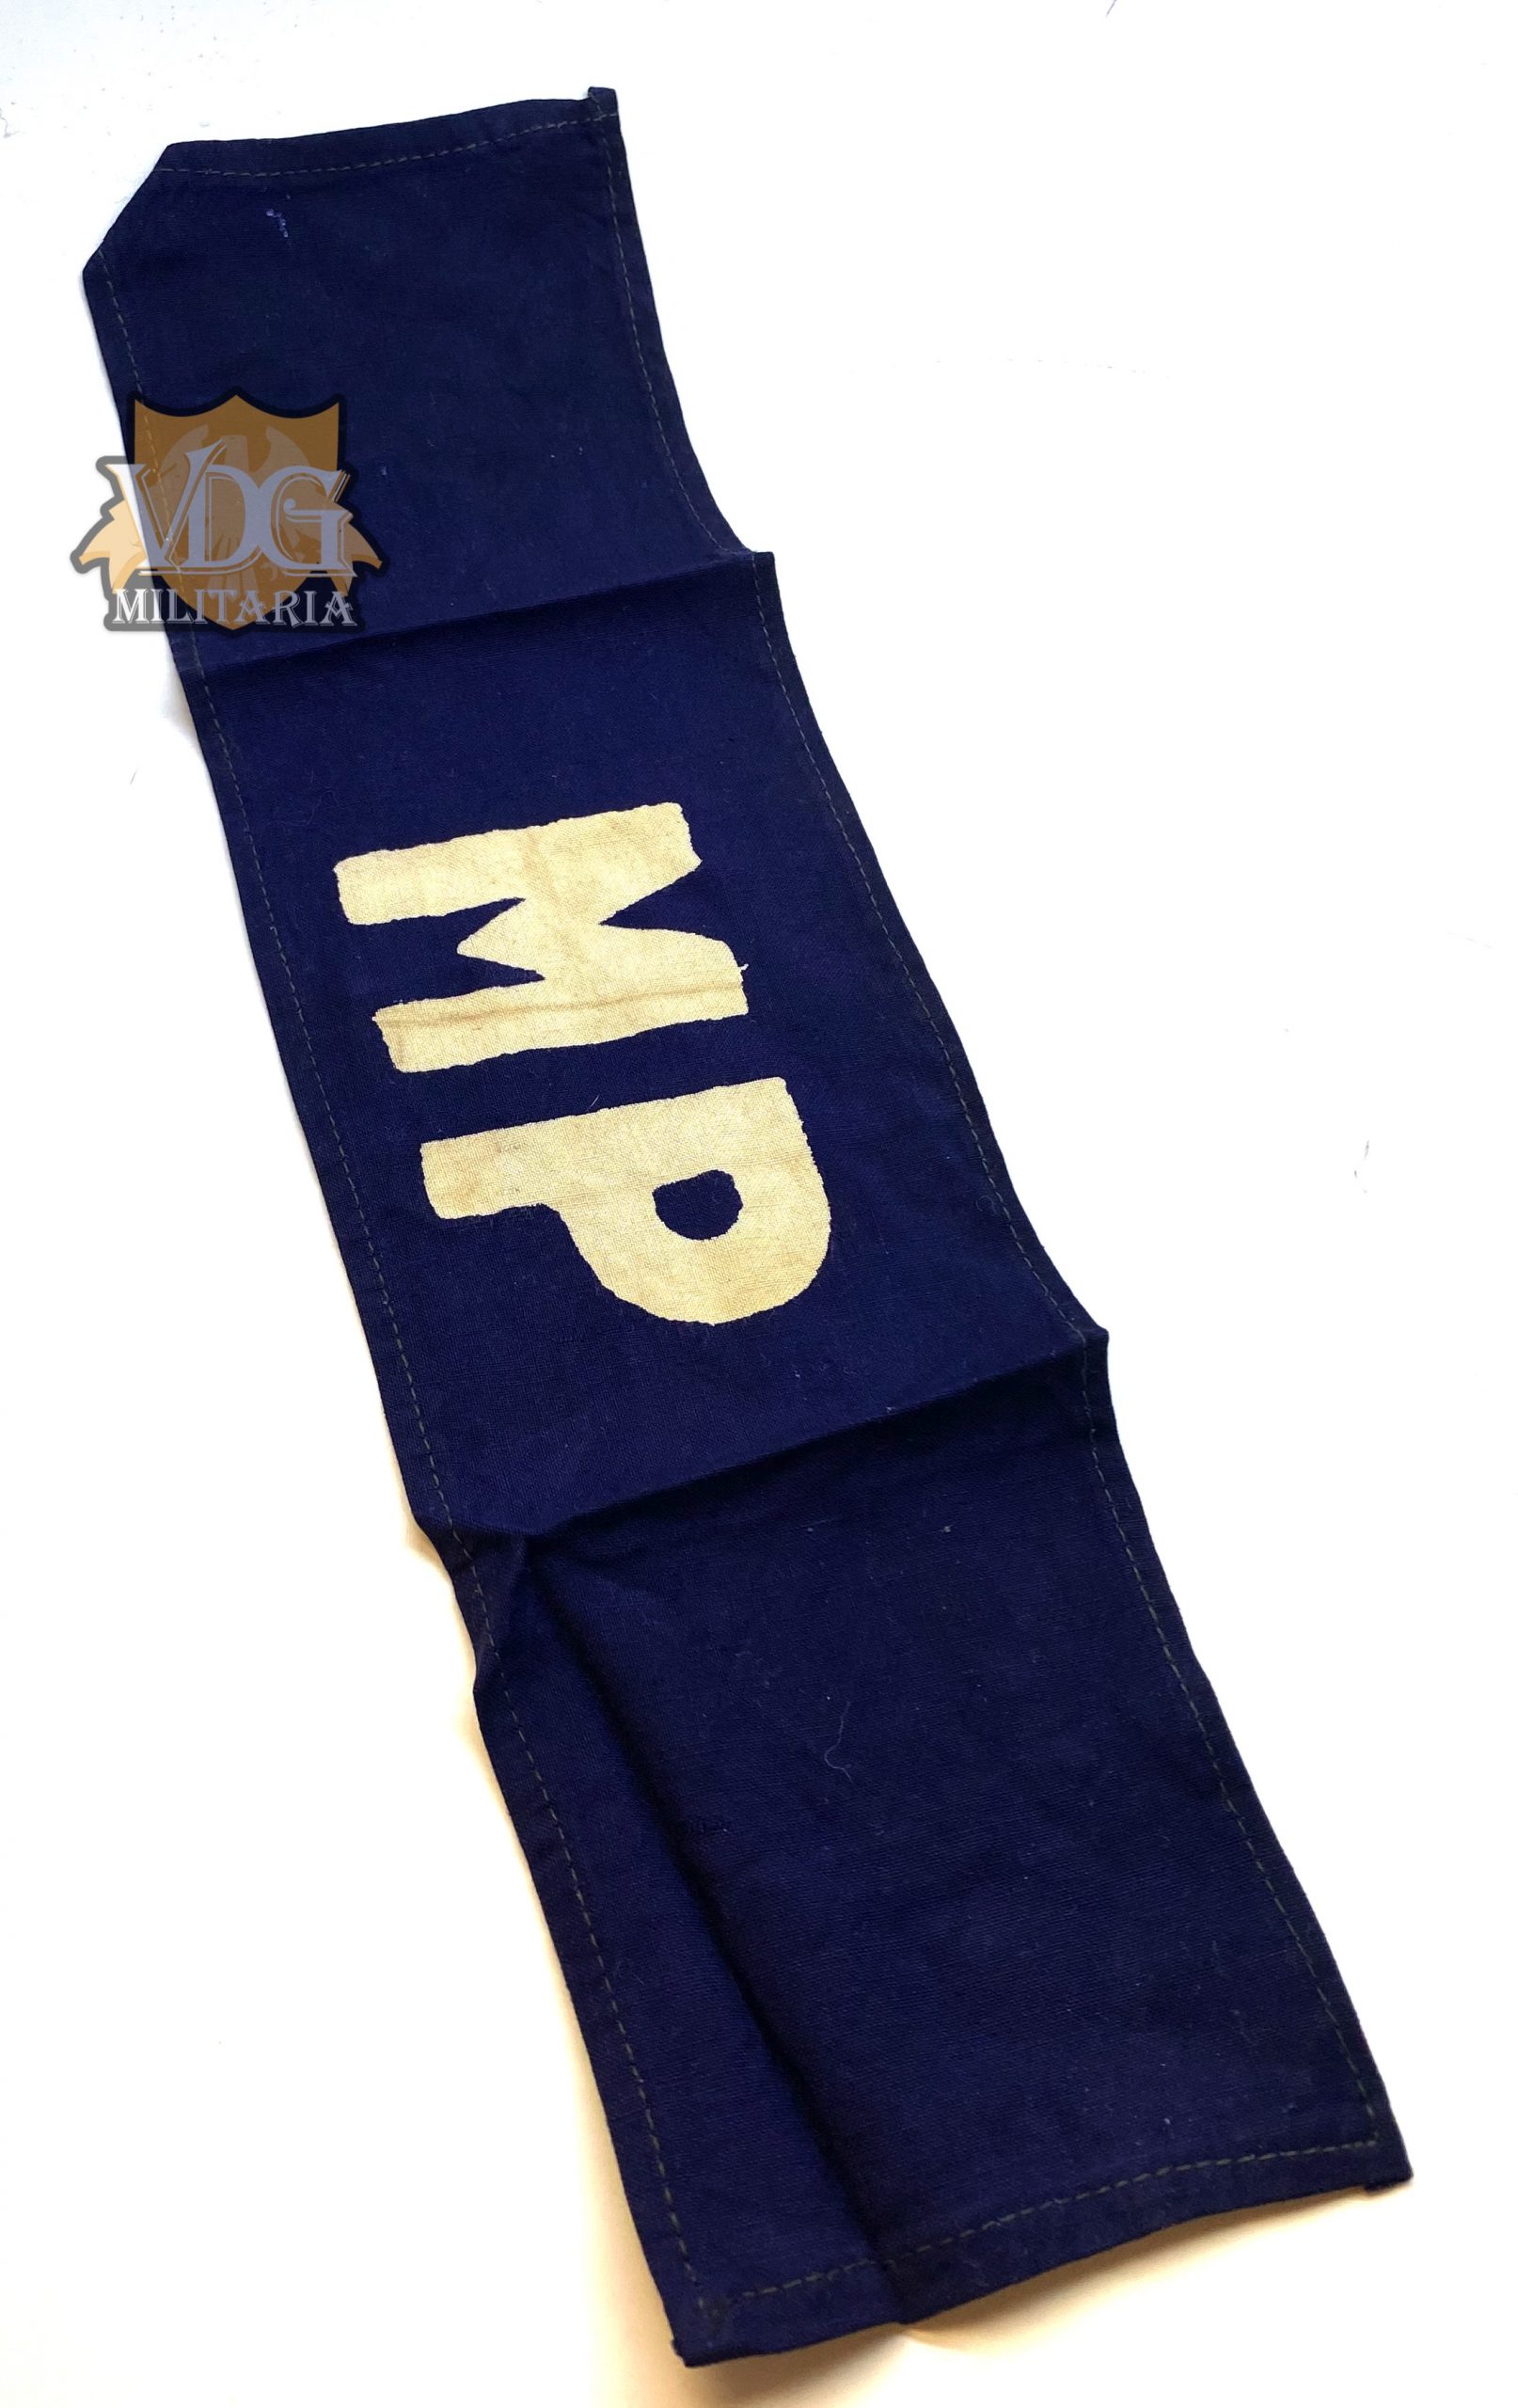 WW2 US Army MP Military Police Printed Armband | VDG Militaria